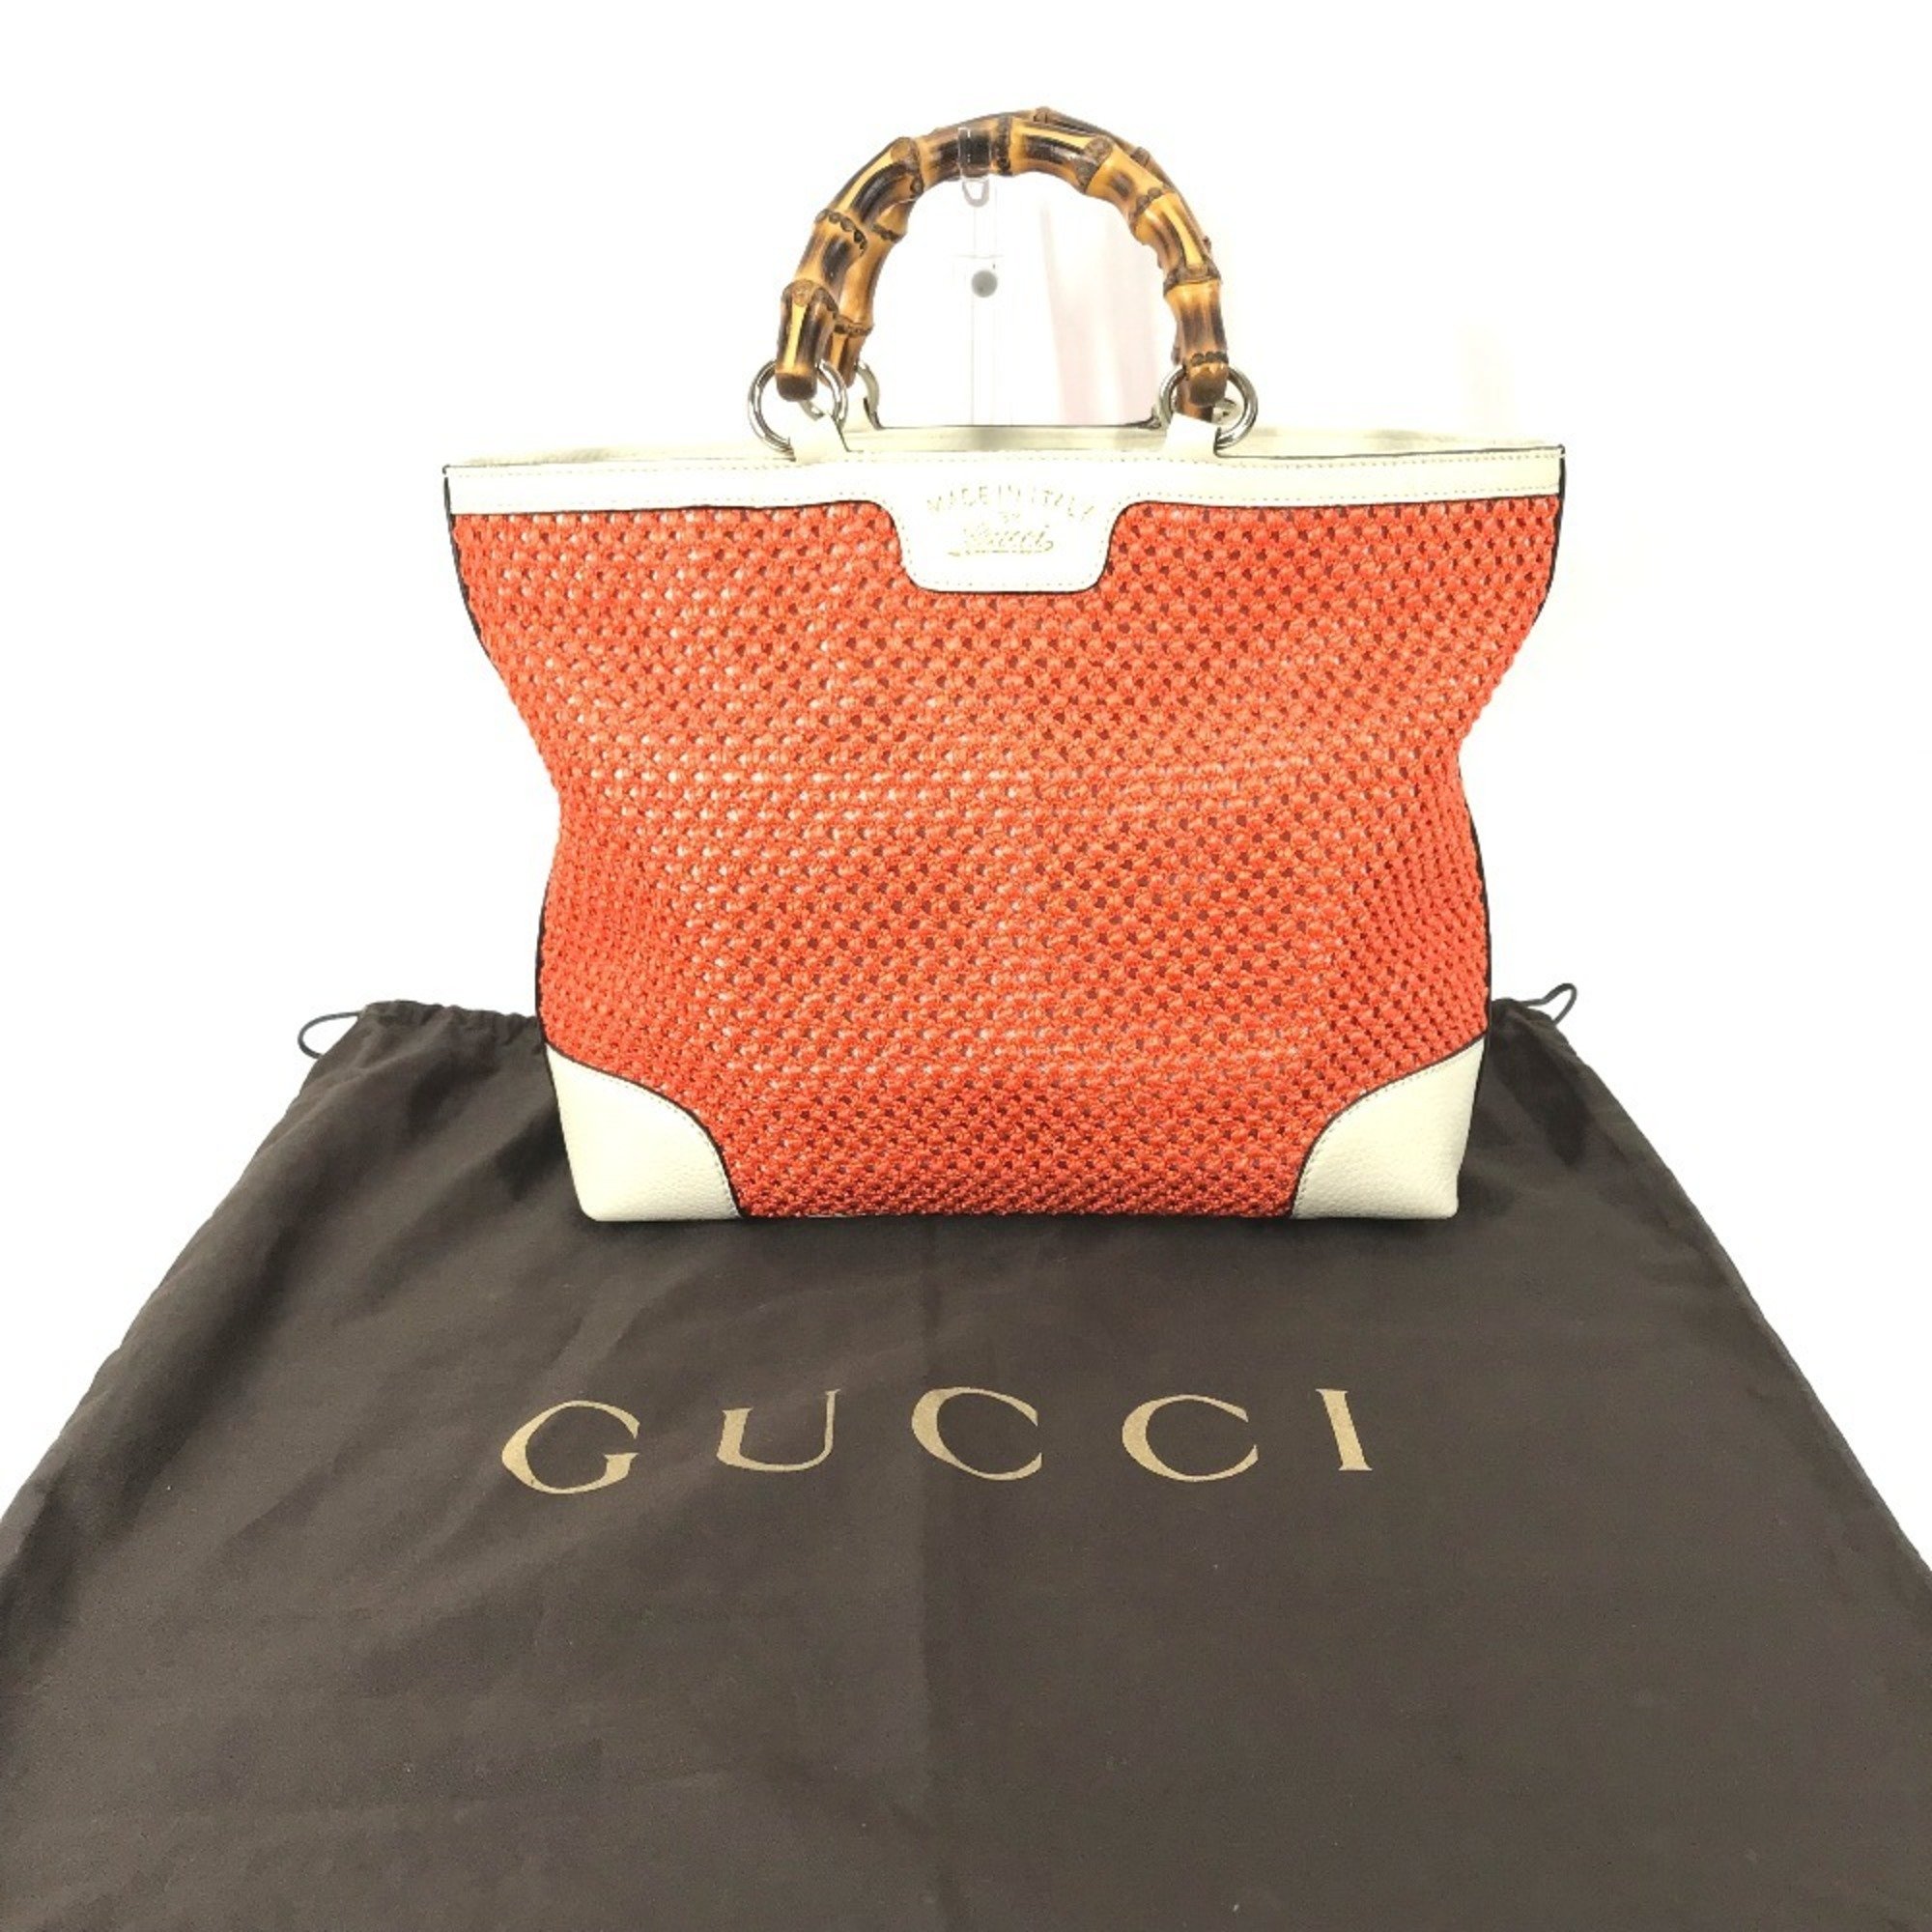 GUCCI Bamboo Tote Bag Handbag Women's Straw Orange White 338965